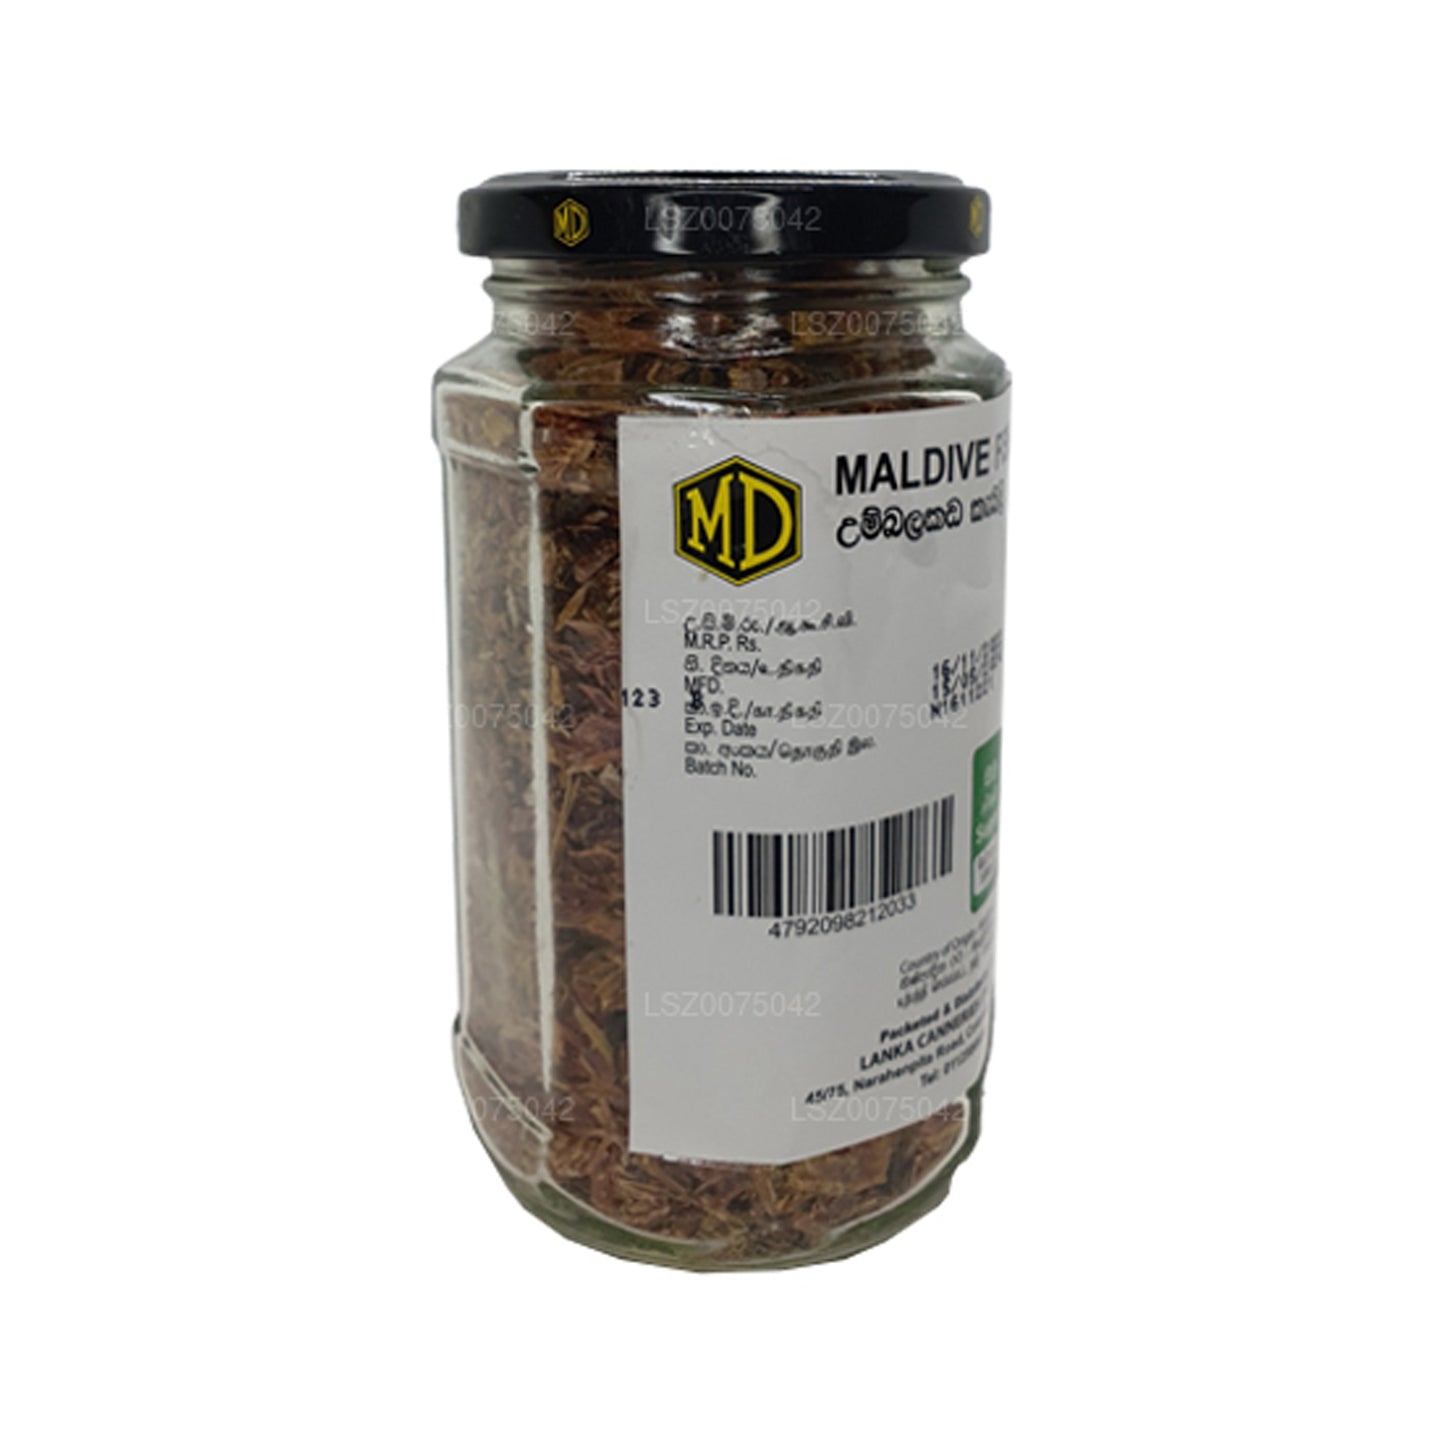 MD Maldiivi Kala Chips Pudel (200g)